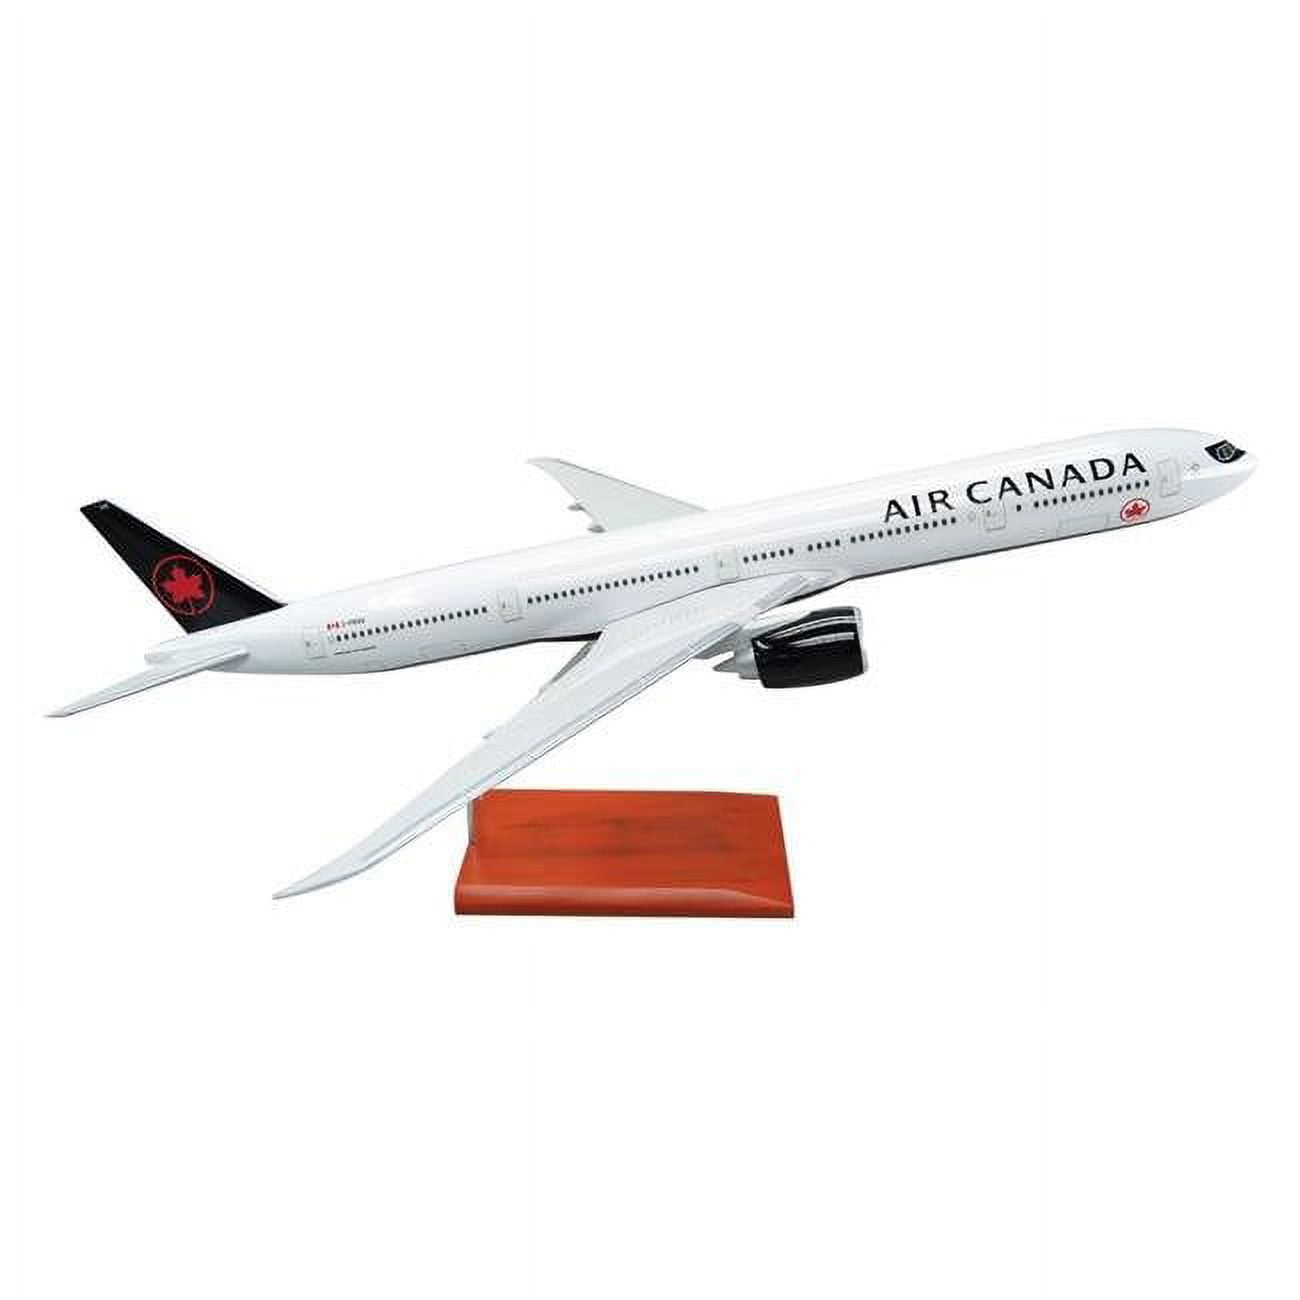 G55610 Exec Ser Air Canada 777-300 1-100 New Livery Model Airplane